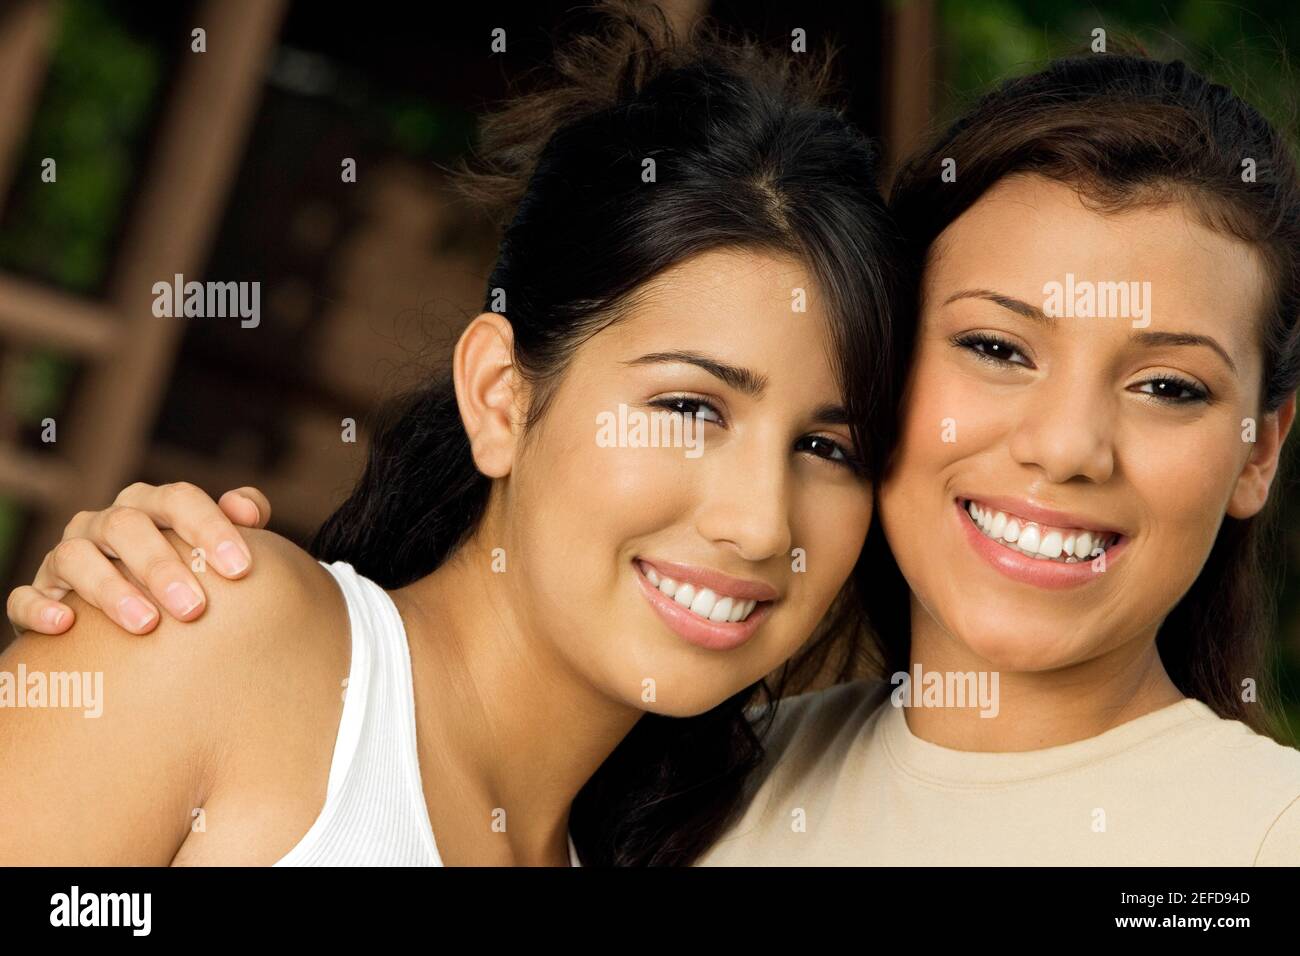 Portrait of two teenage girls smiling Stock Photo